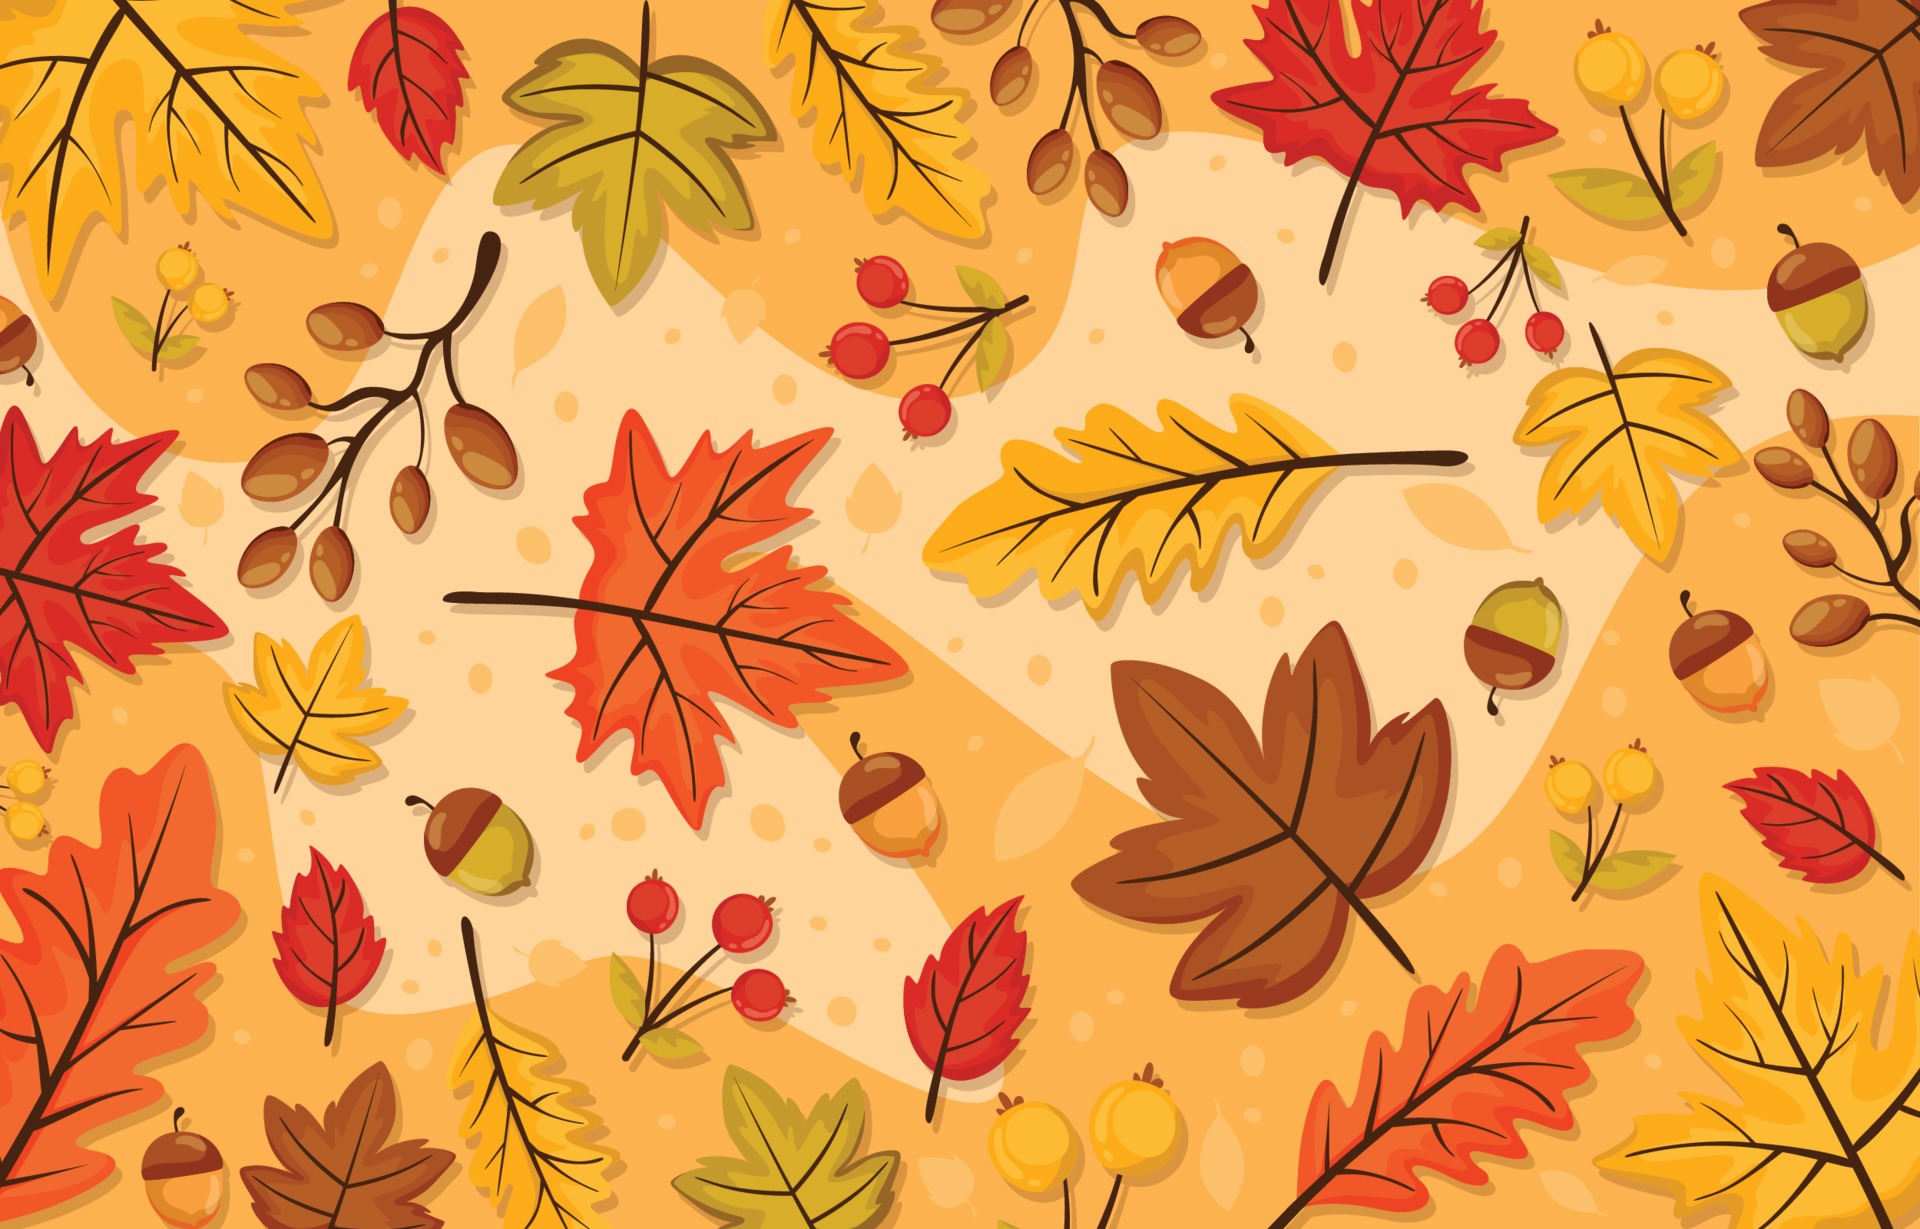 Details 100 autumn leaves background